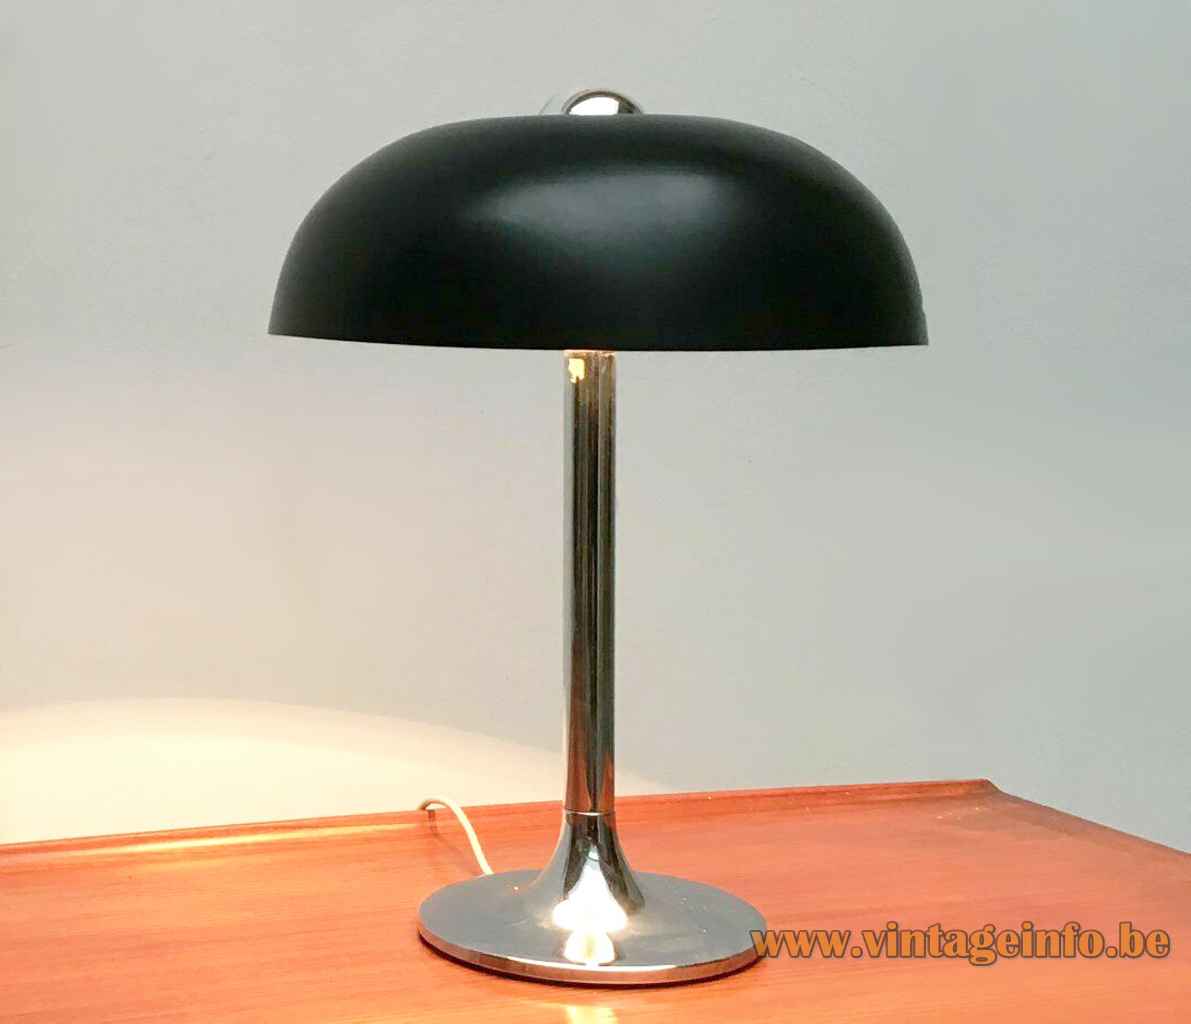 Hustadt-Leuchten mushroom desk lamp round chrome base & rod black round hole lampshade 1970s Germany